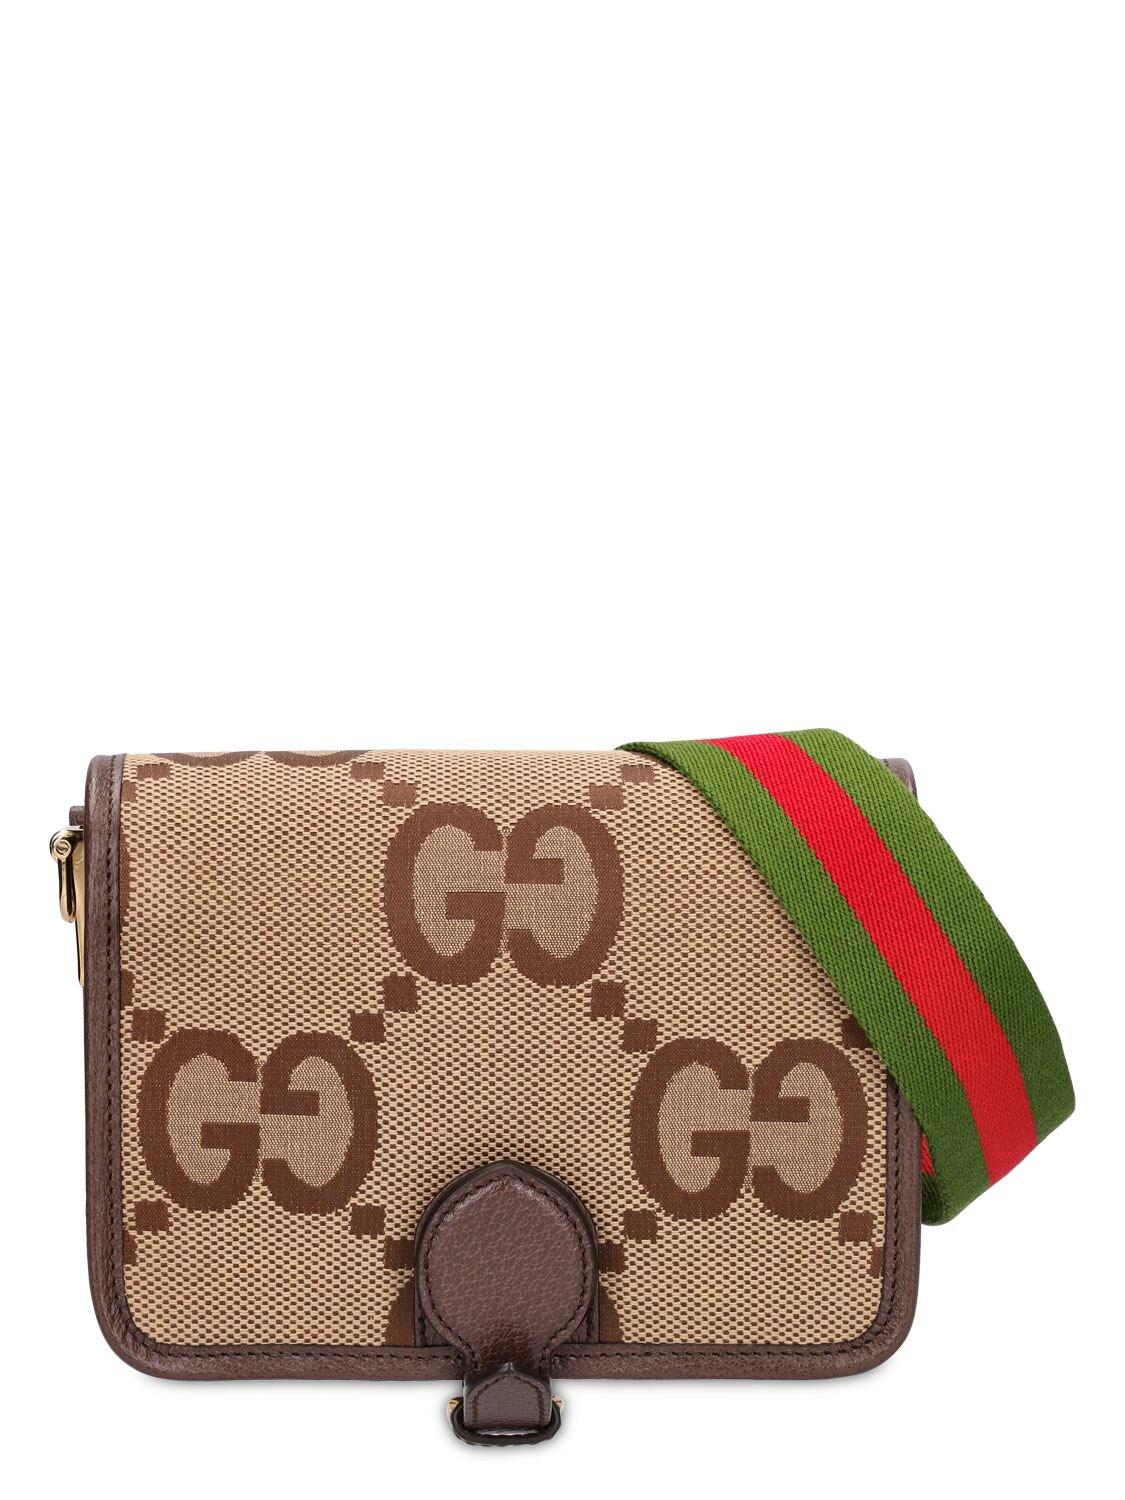 Jumbo GG mini bag in camel and ebony GG canvas